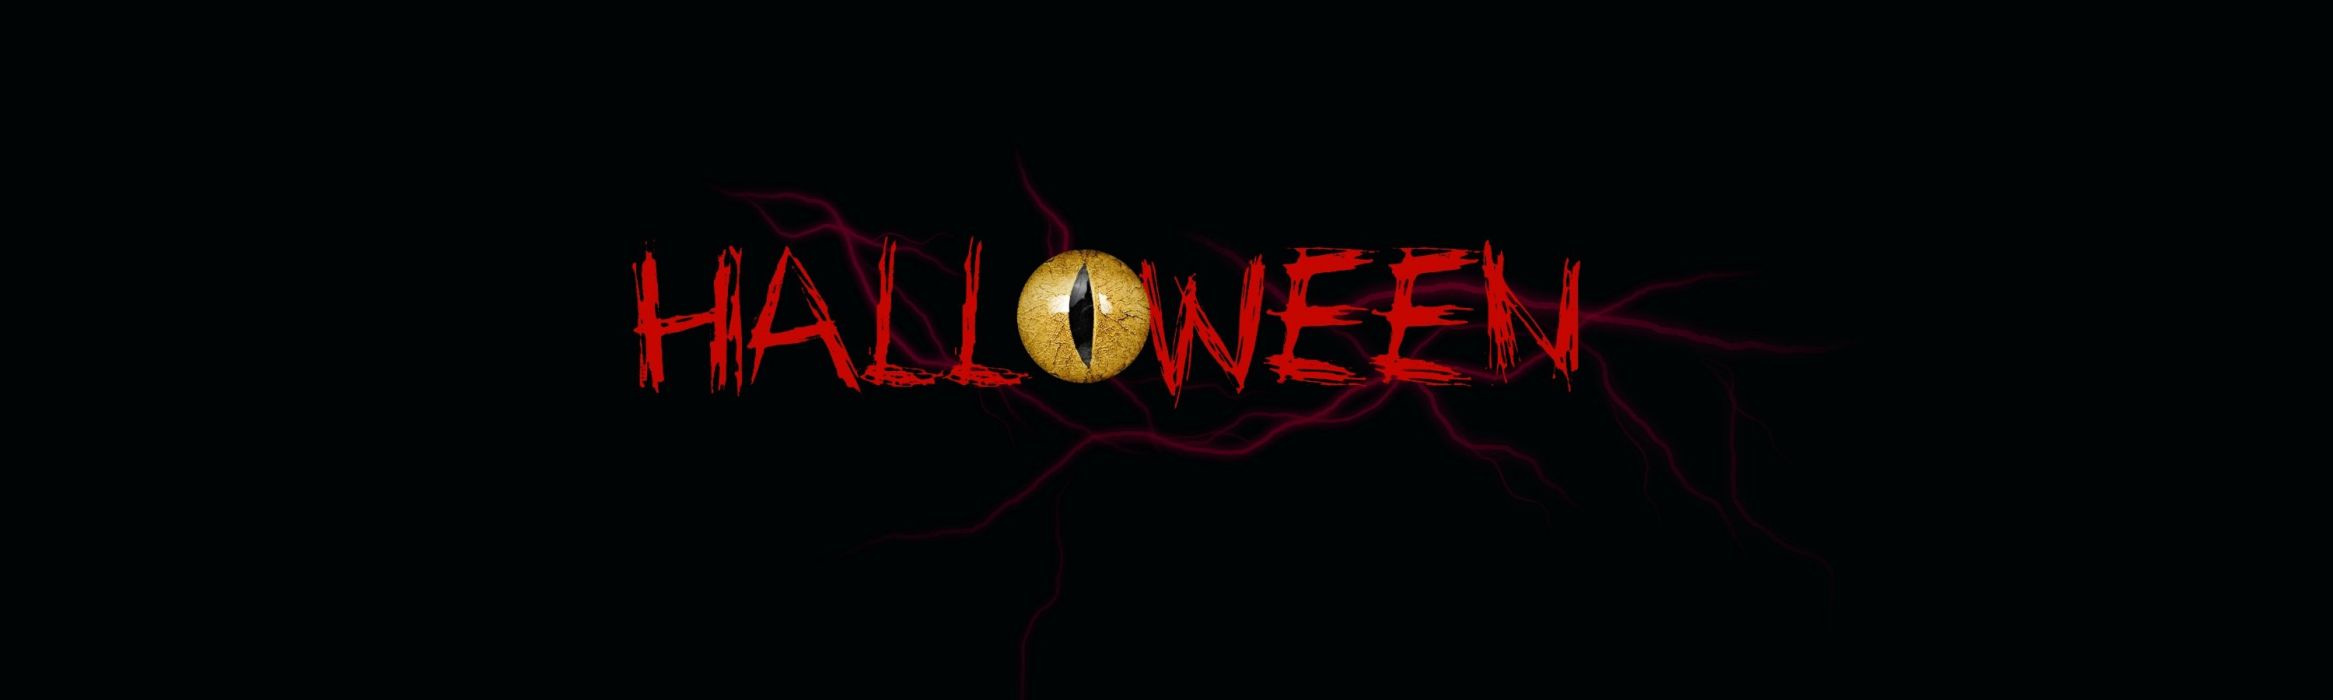 Banner Header Homepage Halloween Creepy Scary wallpaperx900